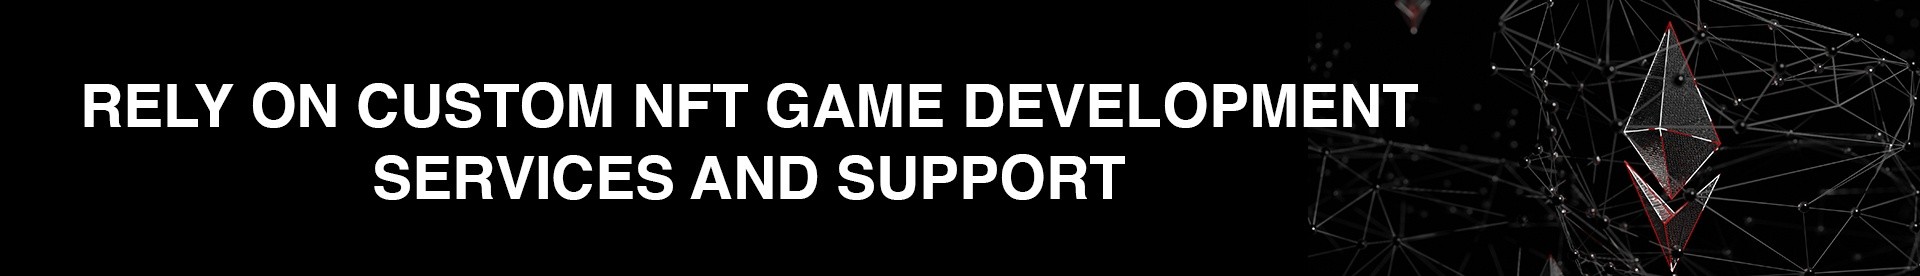 NFT game development services